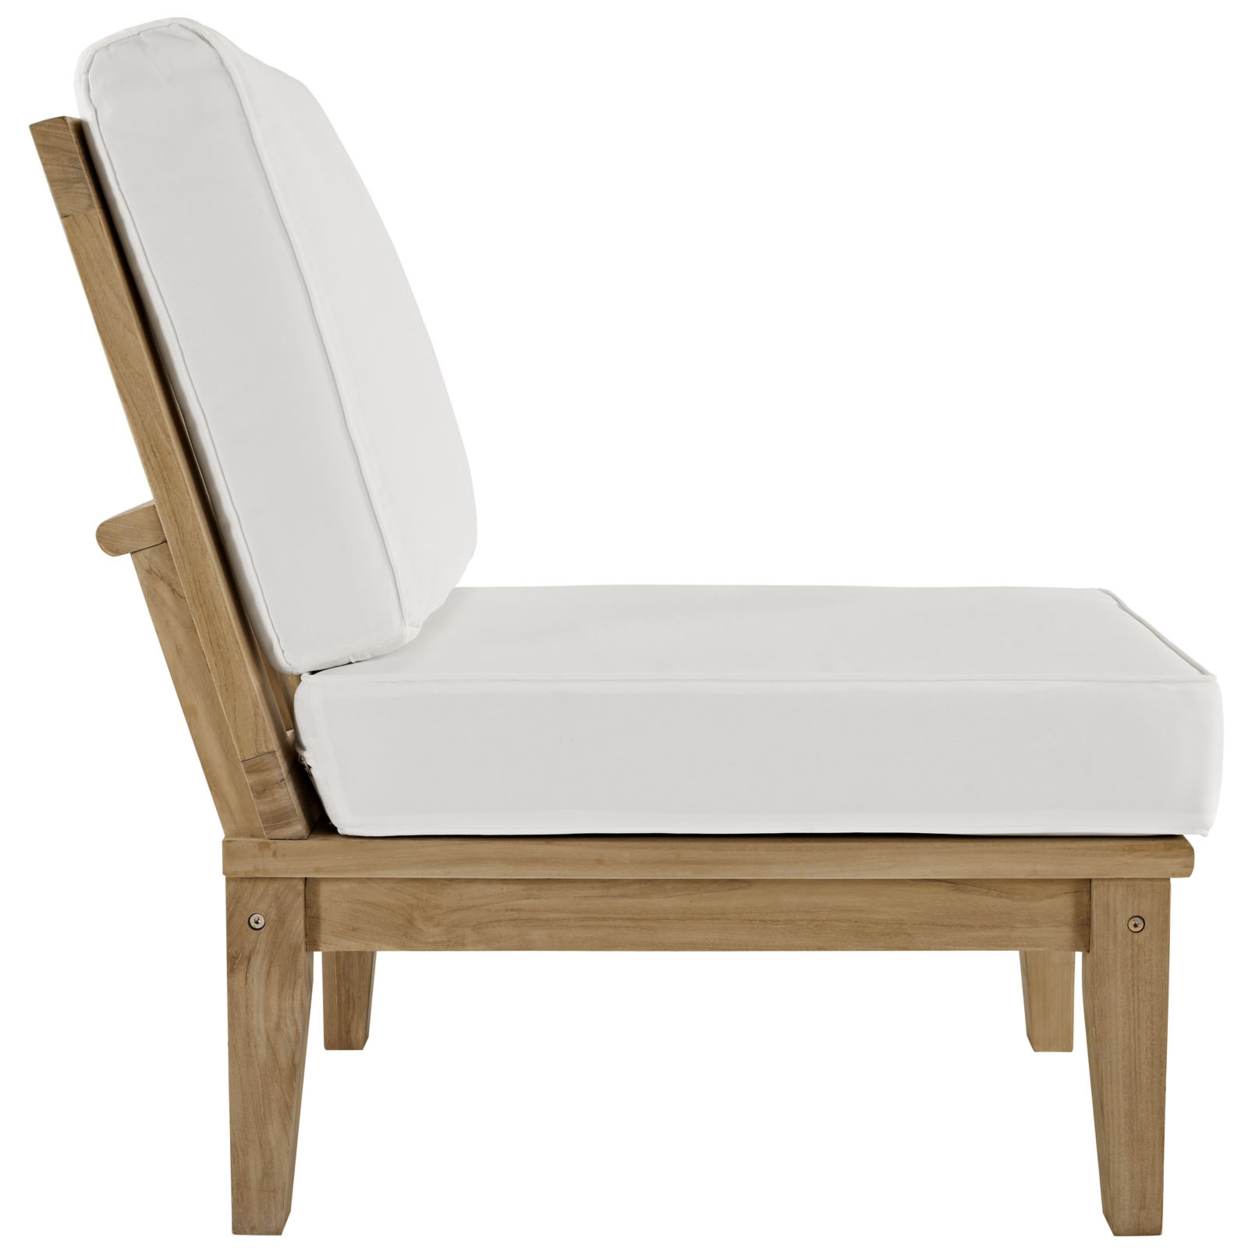 Marina 2 Piece Outdoor Patio Teak Sofa Set, Natural White Size : 31.5Lx32.5Wx31.5H